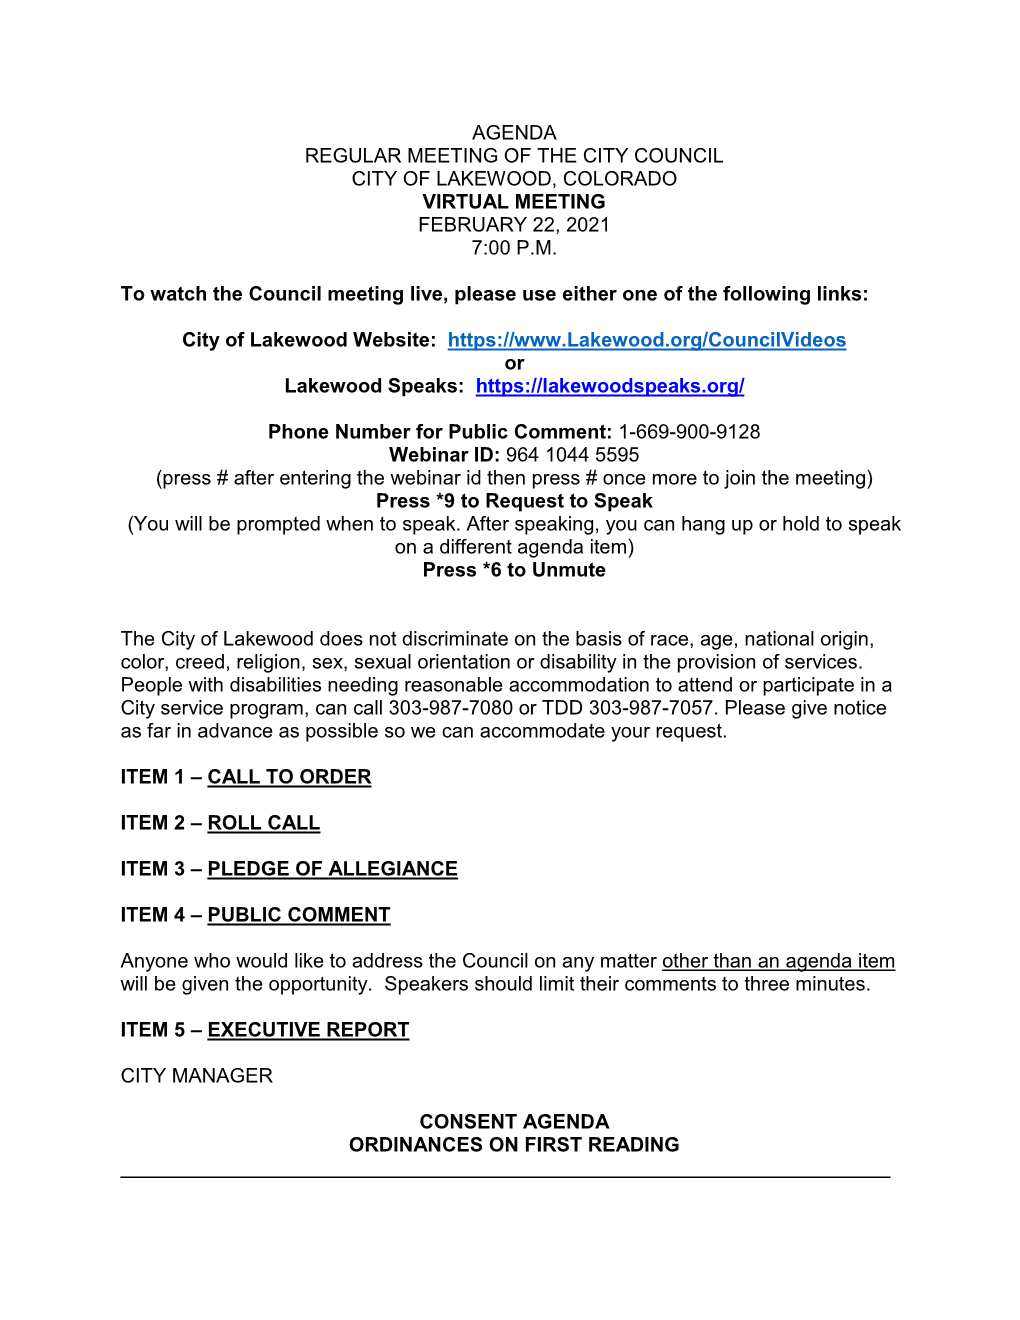 Agenda Regular Meeting of the City Council City of Lakewood, Colorado Virtual Meeting February 22, 2021 7:00 P.M